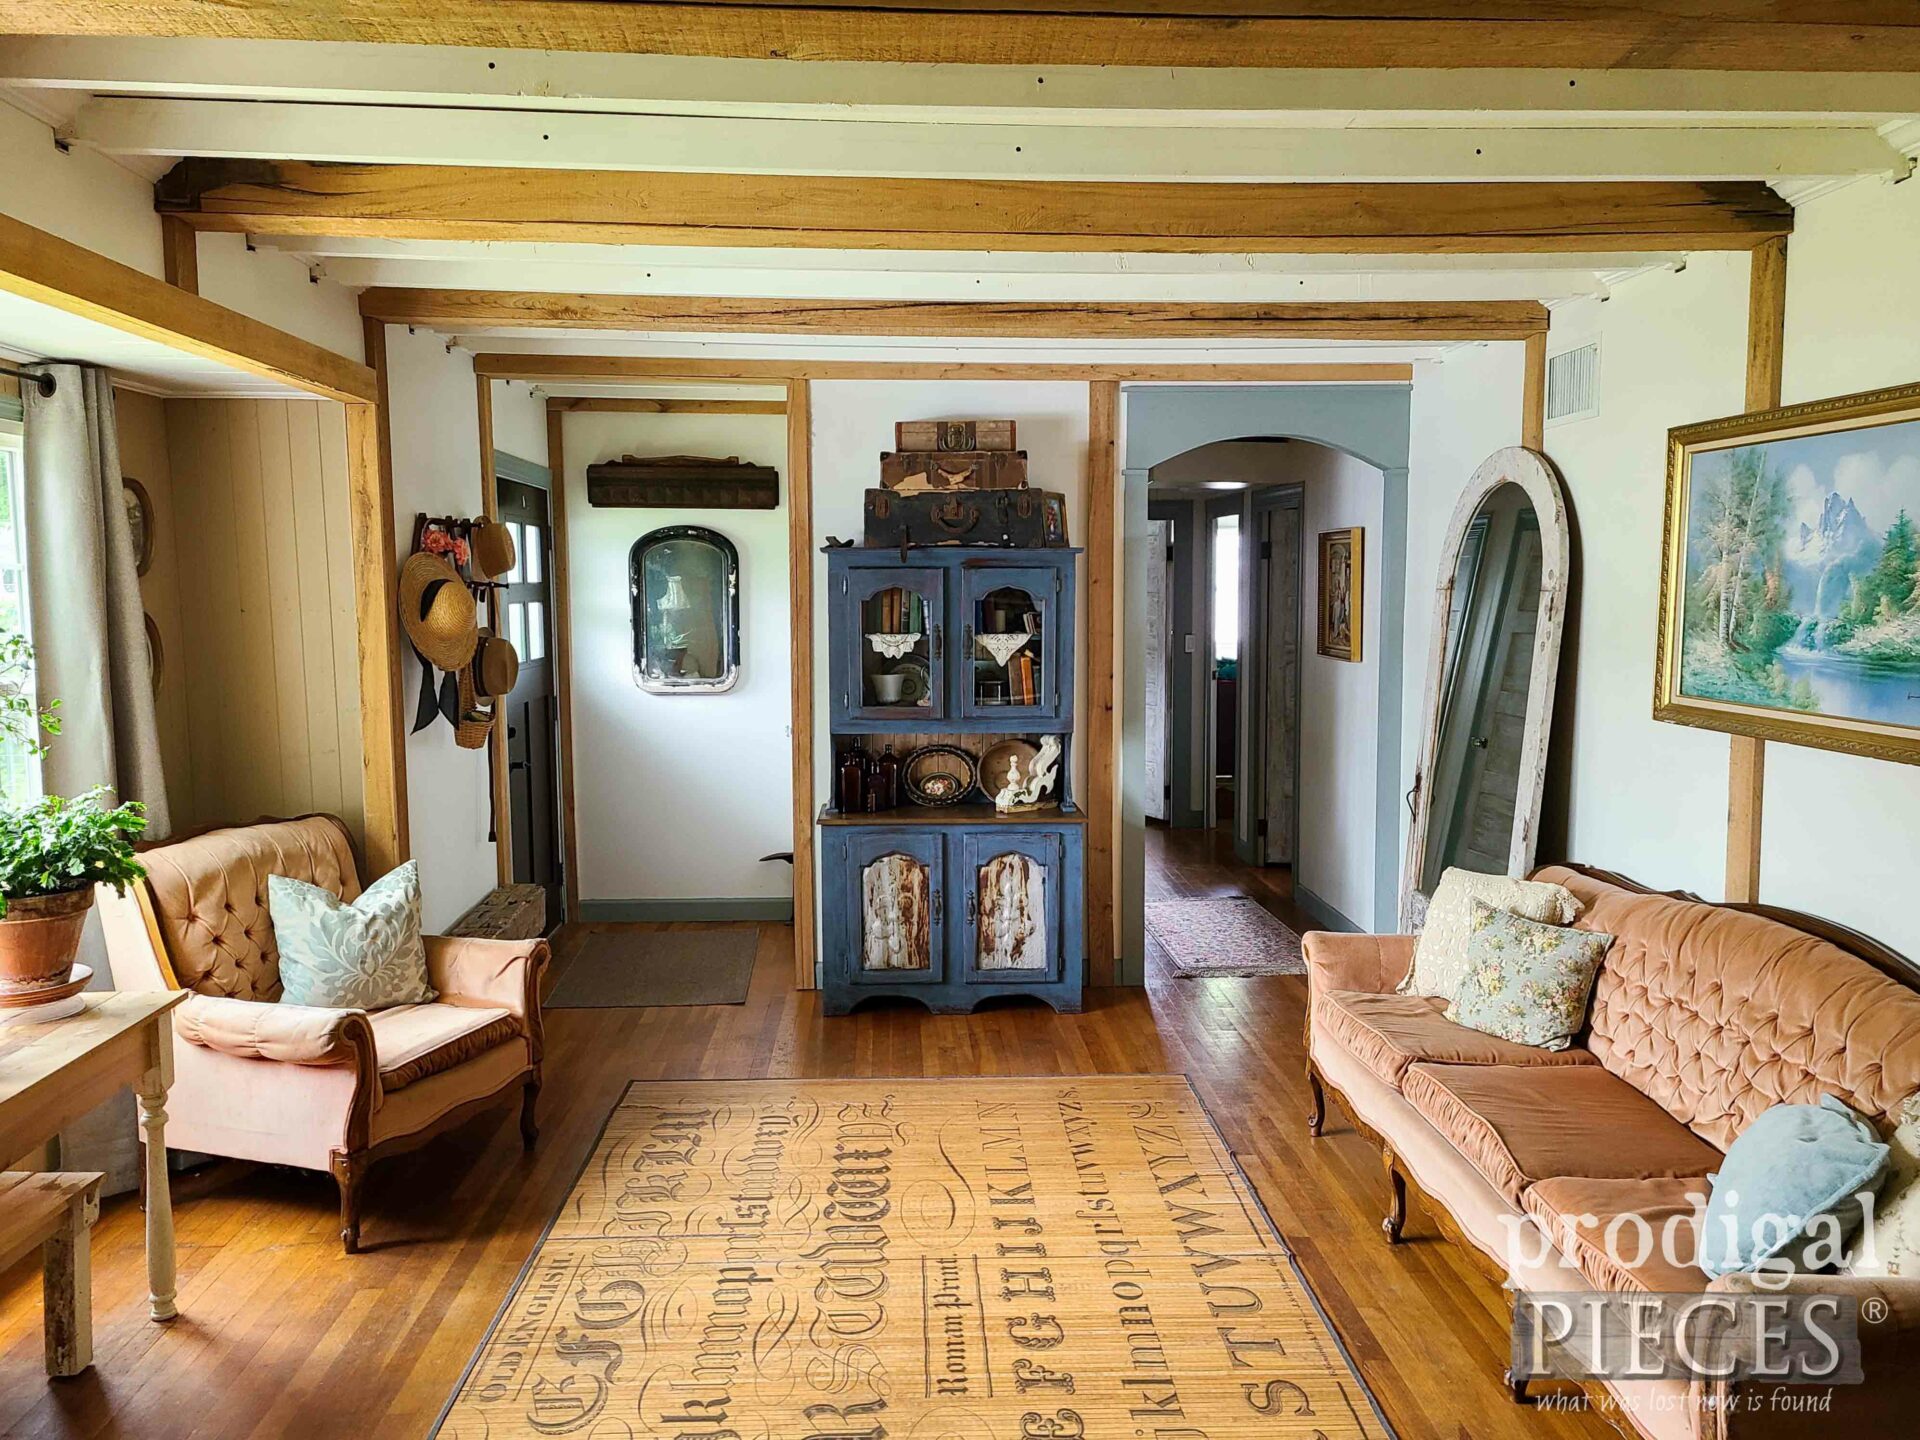 Rustic Farmhouse Living Room Remodel by Larissa of Prodigal Pieces | prodigalpieces.com #prodigalpieces